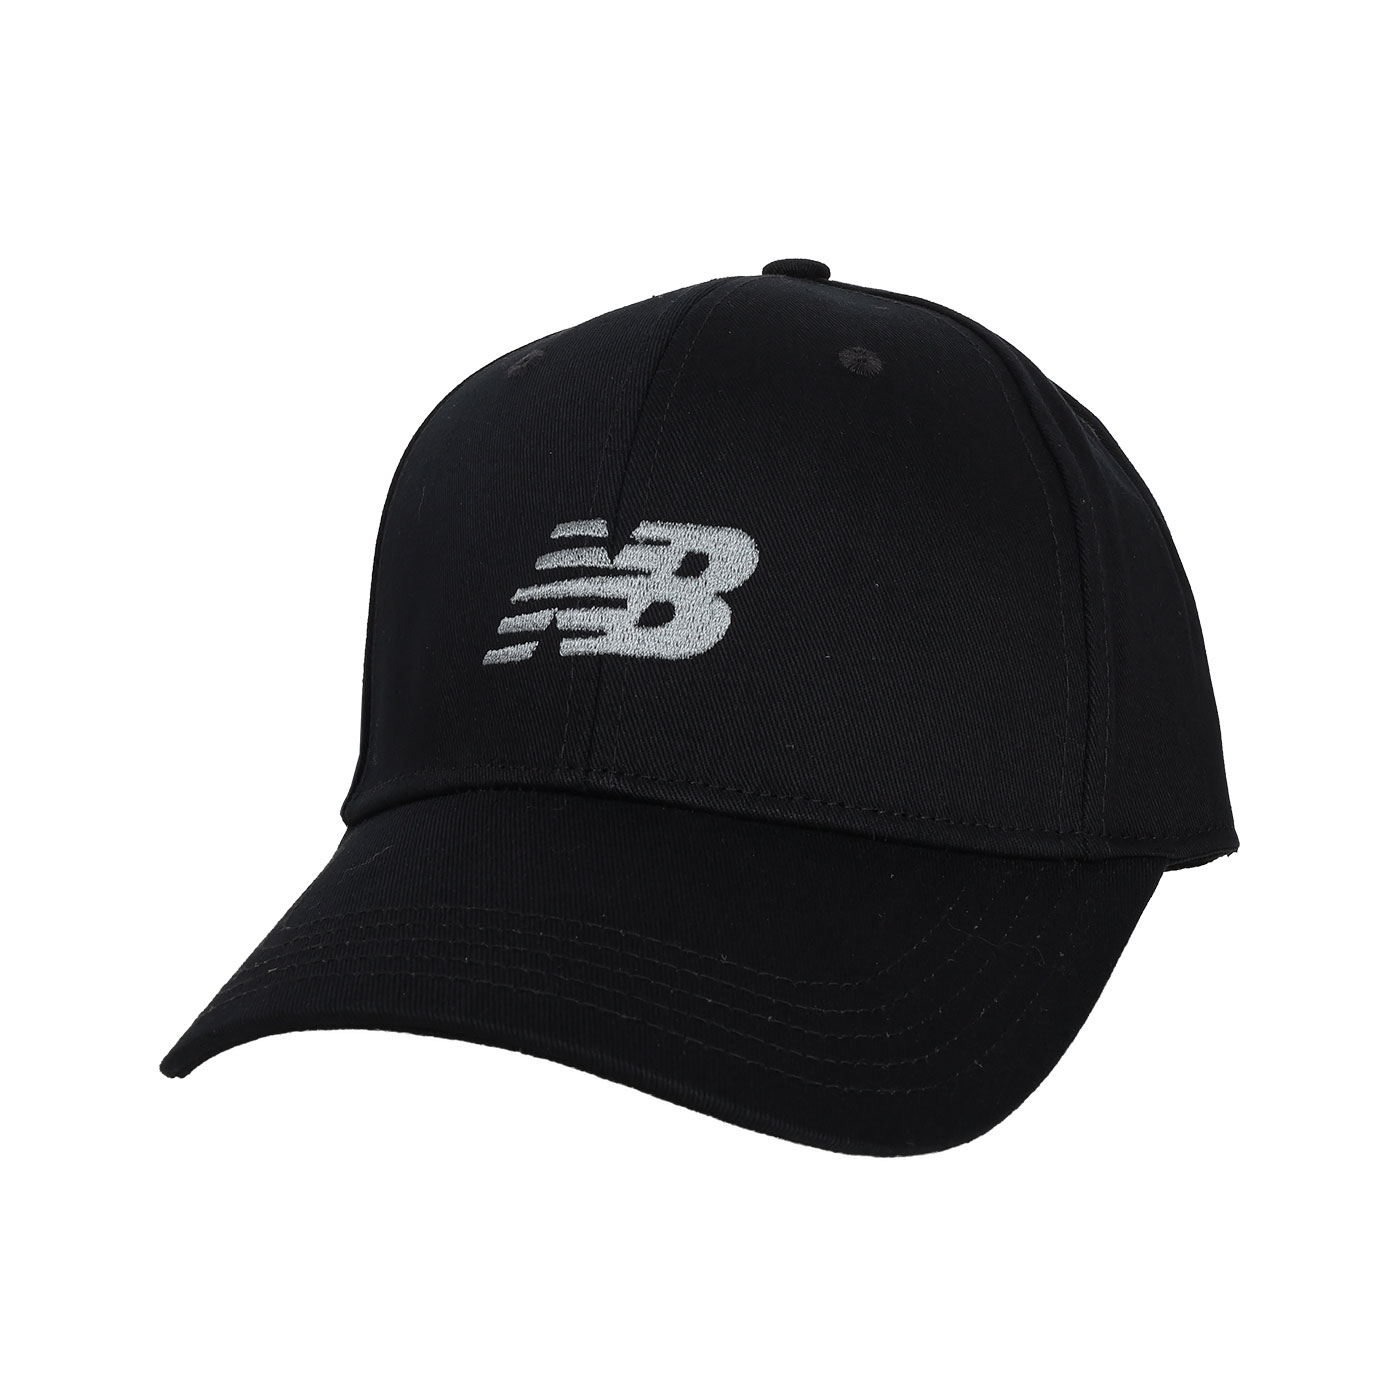 NEW BALANCE 運動帽  LAH41013BK - 黑灰